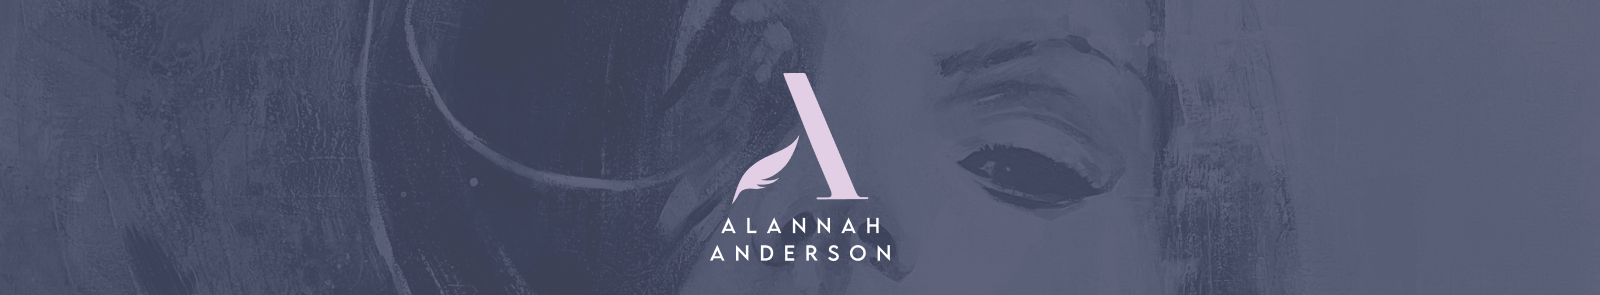 Alannah Anderson's profile banner